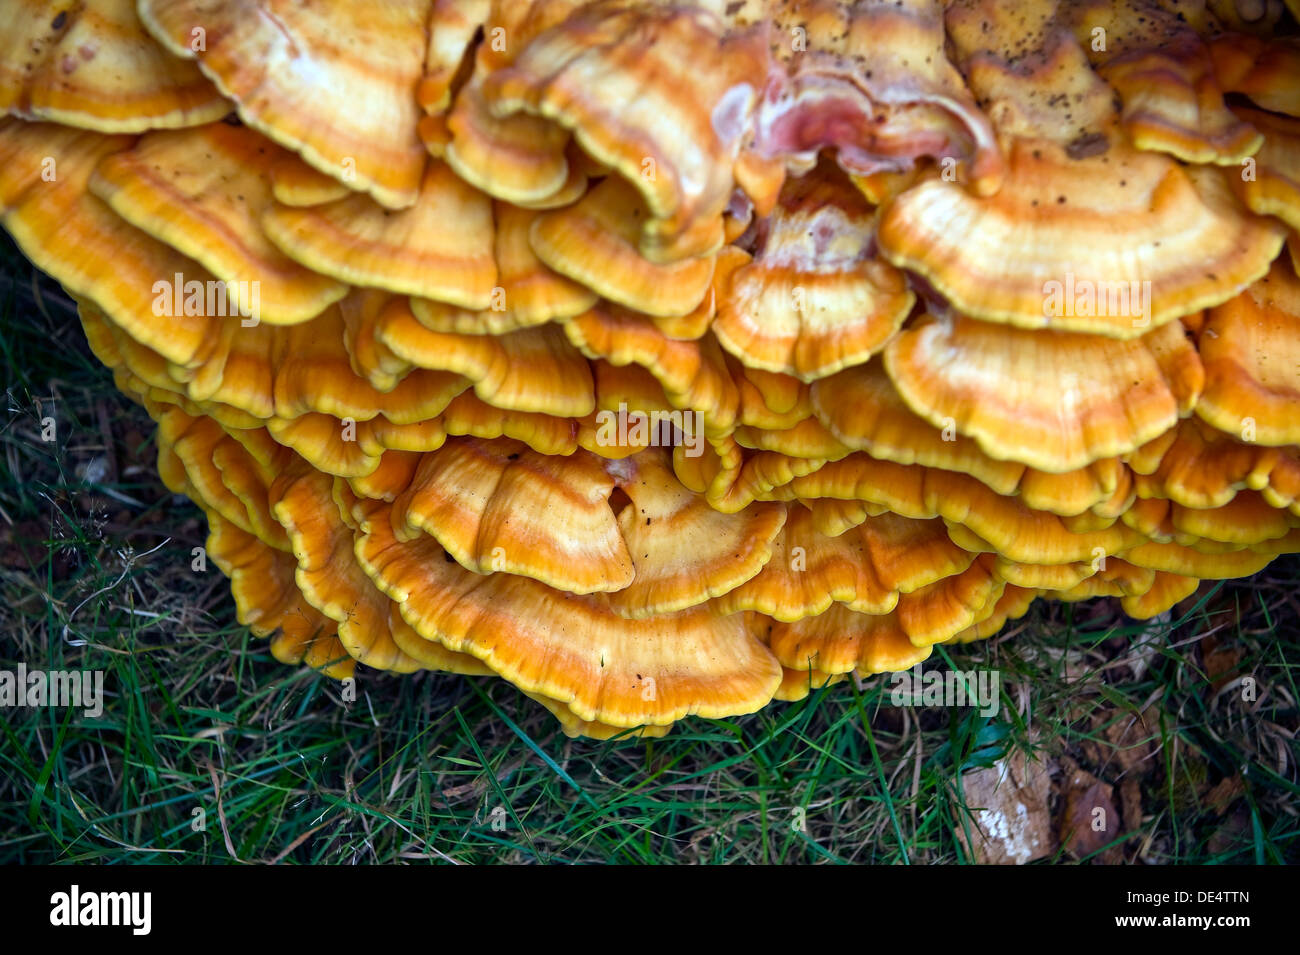 Bracket fungus Laetiporus sulphureus (chicken of the woods) on a dead tree trunk. Stock Photo